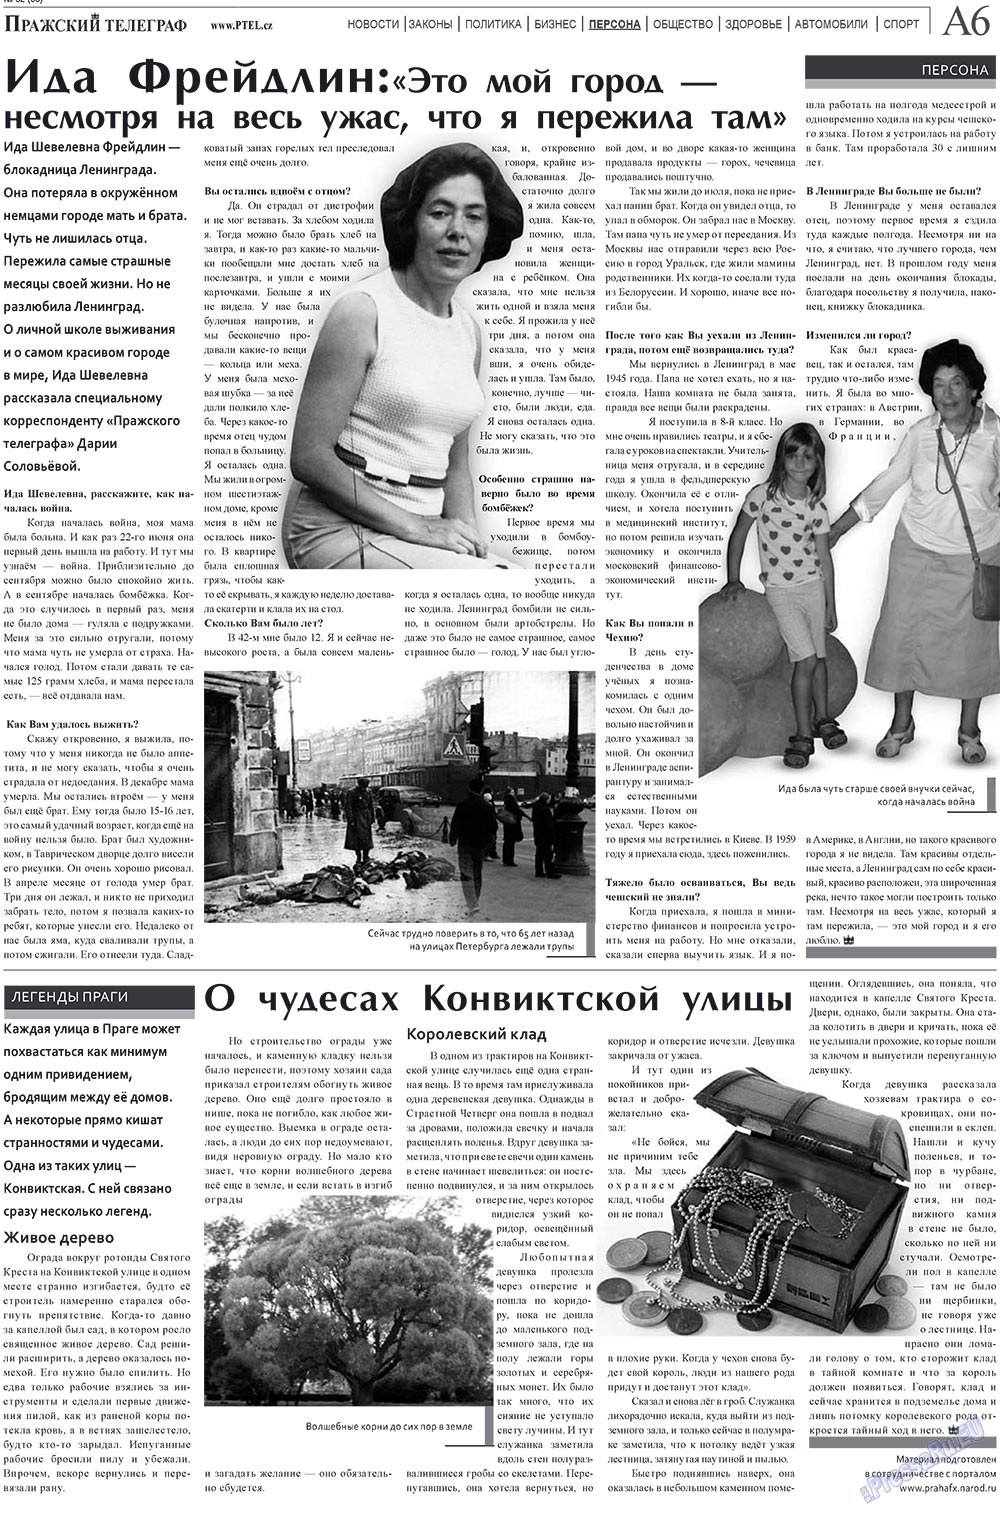 Пражский телеграф, газета. 2010 №32 стр.6